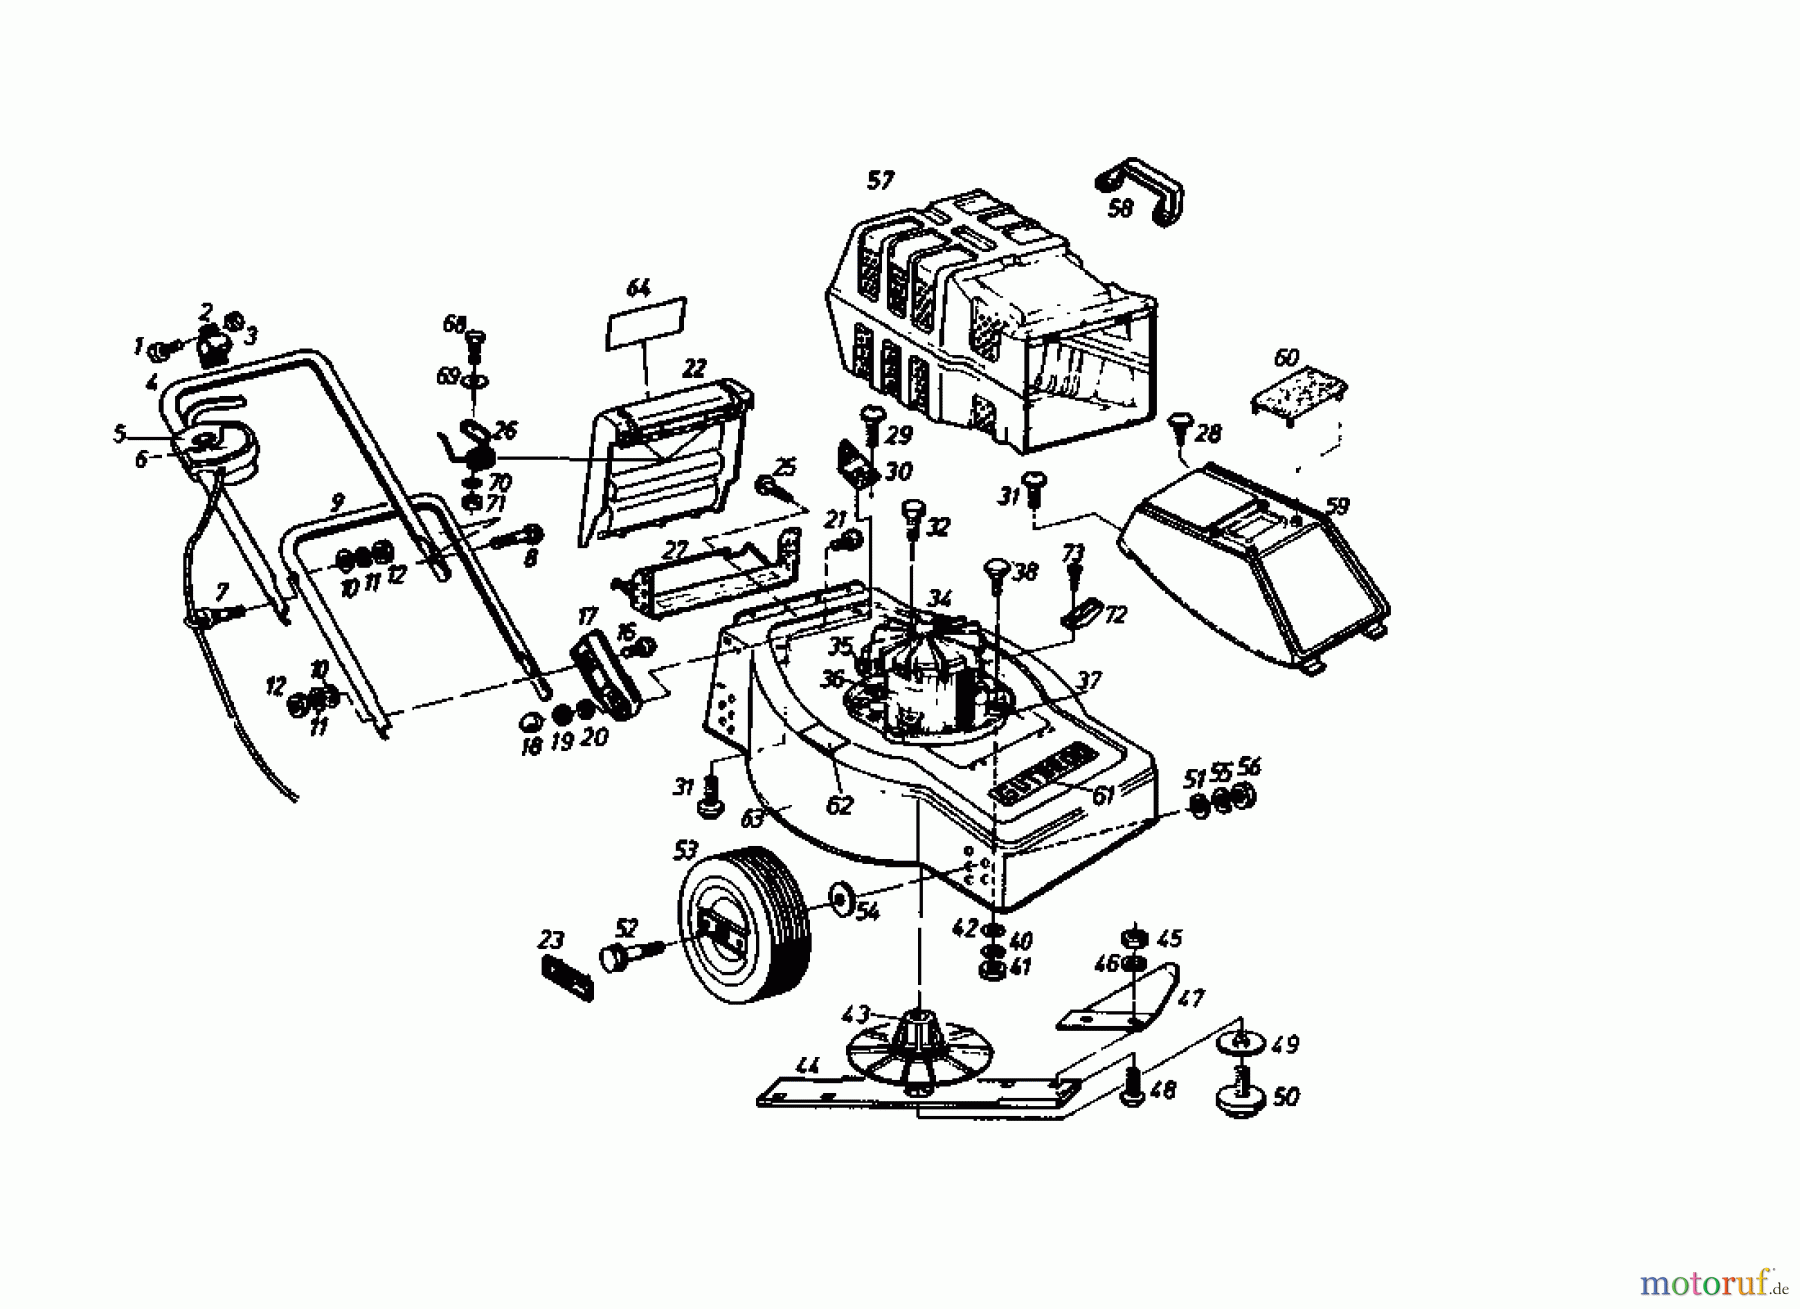  Gutbrod Electric mower TURBO 46 HE 02899.01  (1986) Basic machine